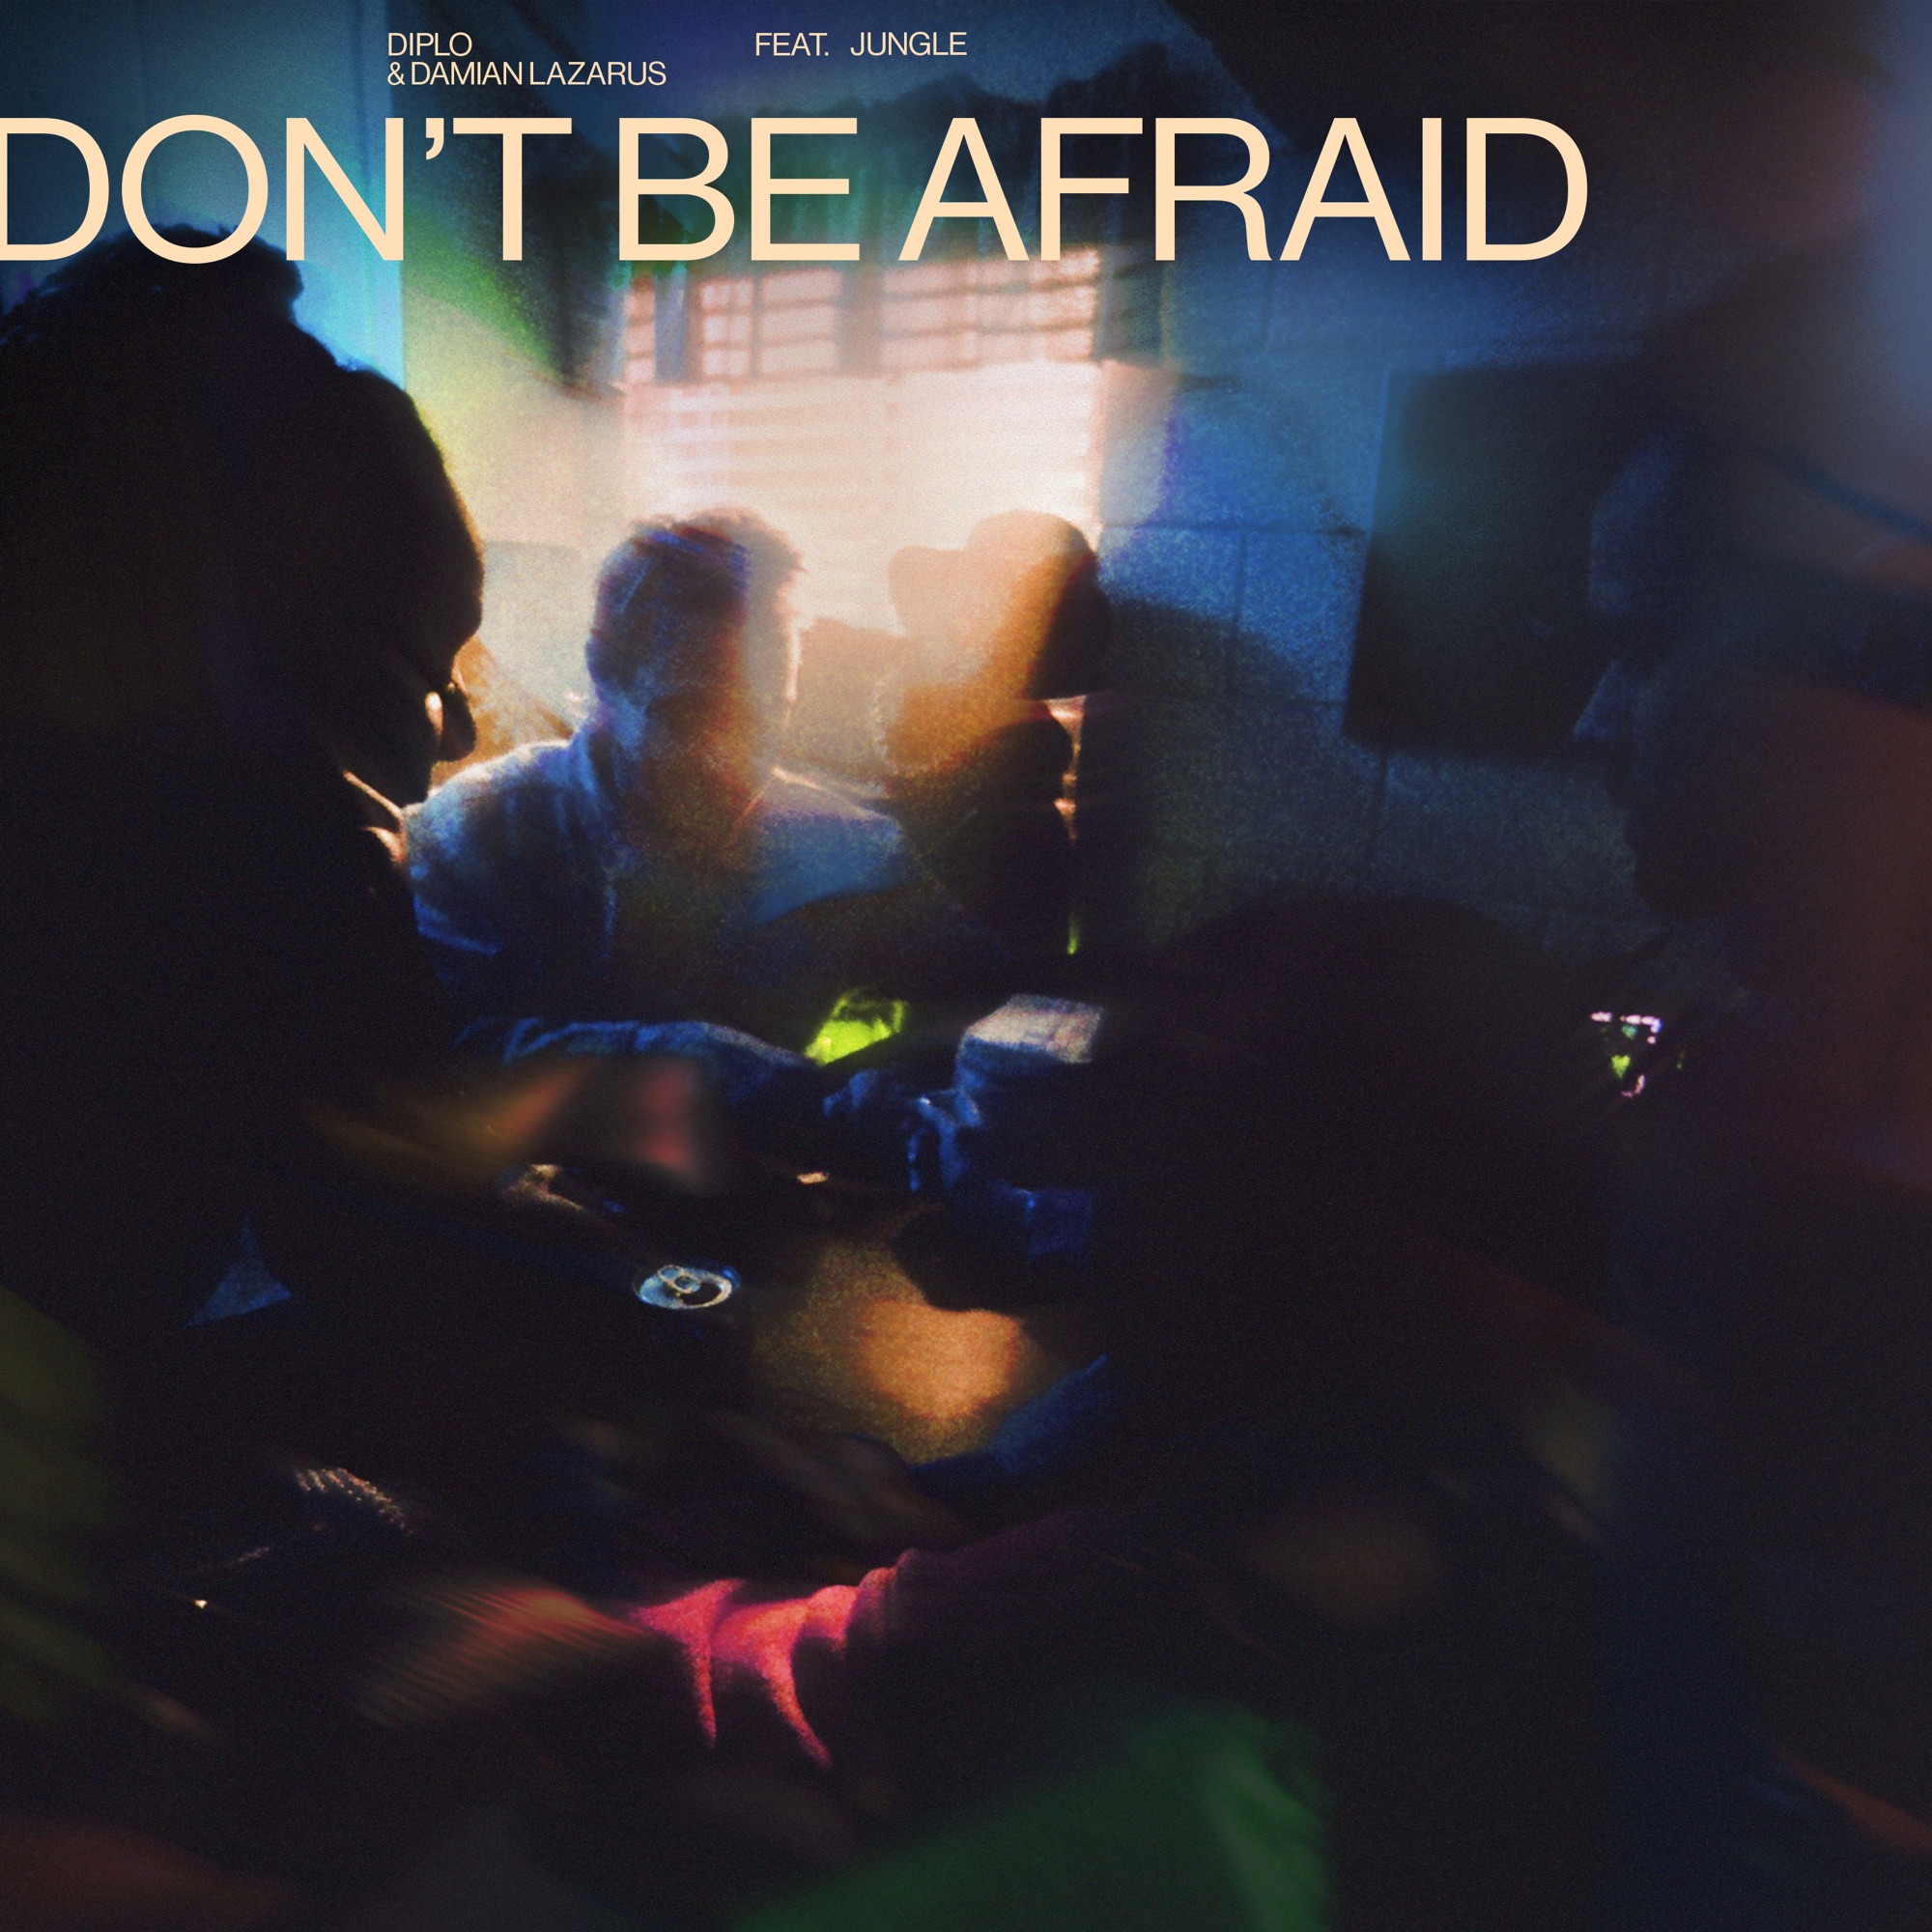 Diplo & Damian Lazarus - Don't Be Afraid (feat. Jungle) - Single